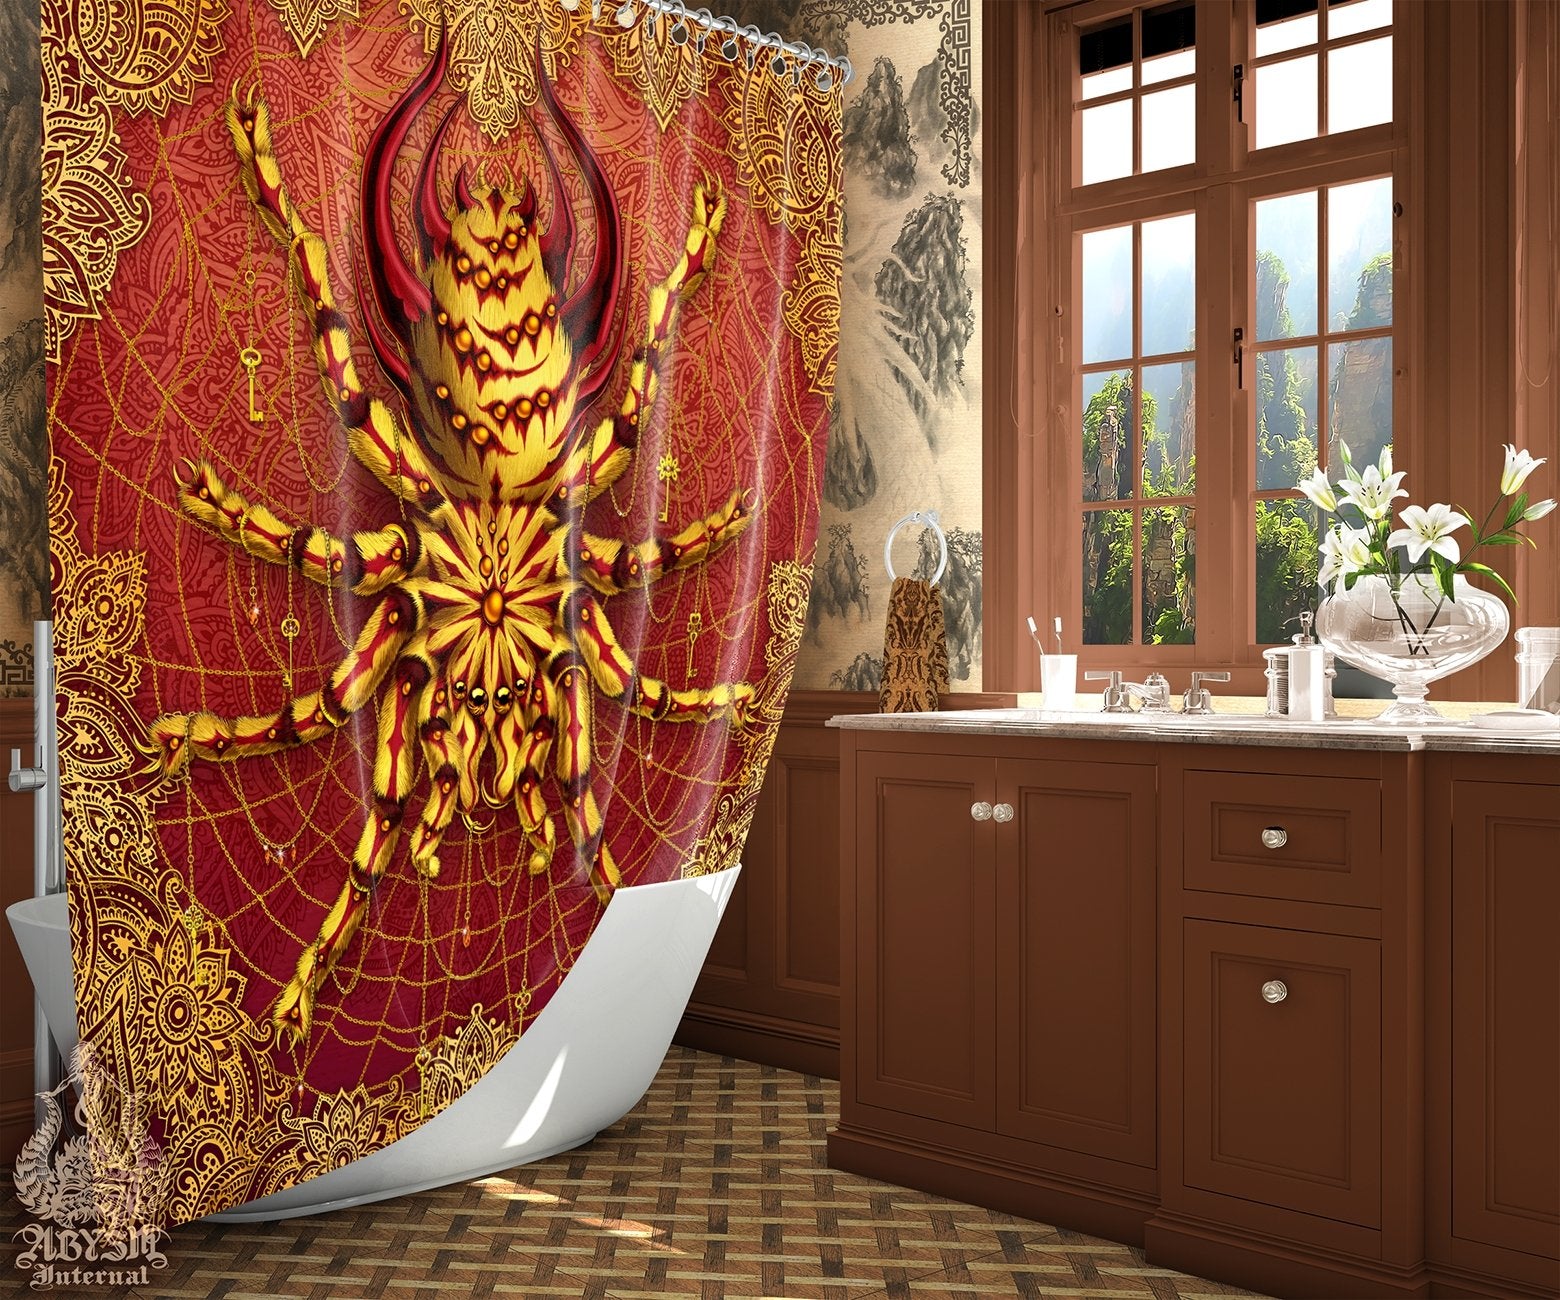 Boho Shower Curtain, Indie Bathroom Decor, Alternative Nature Home, Eclectic and Funky Home - Spider, Mandalas, Tarantula Art - Abysm Internal